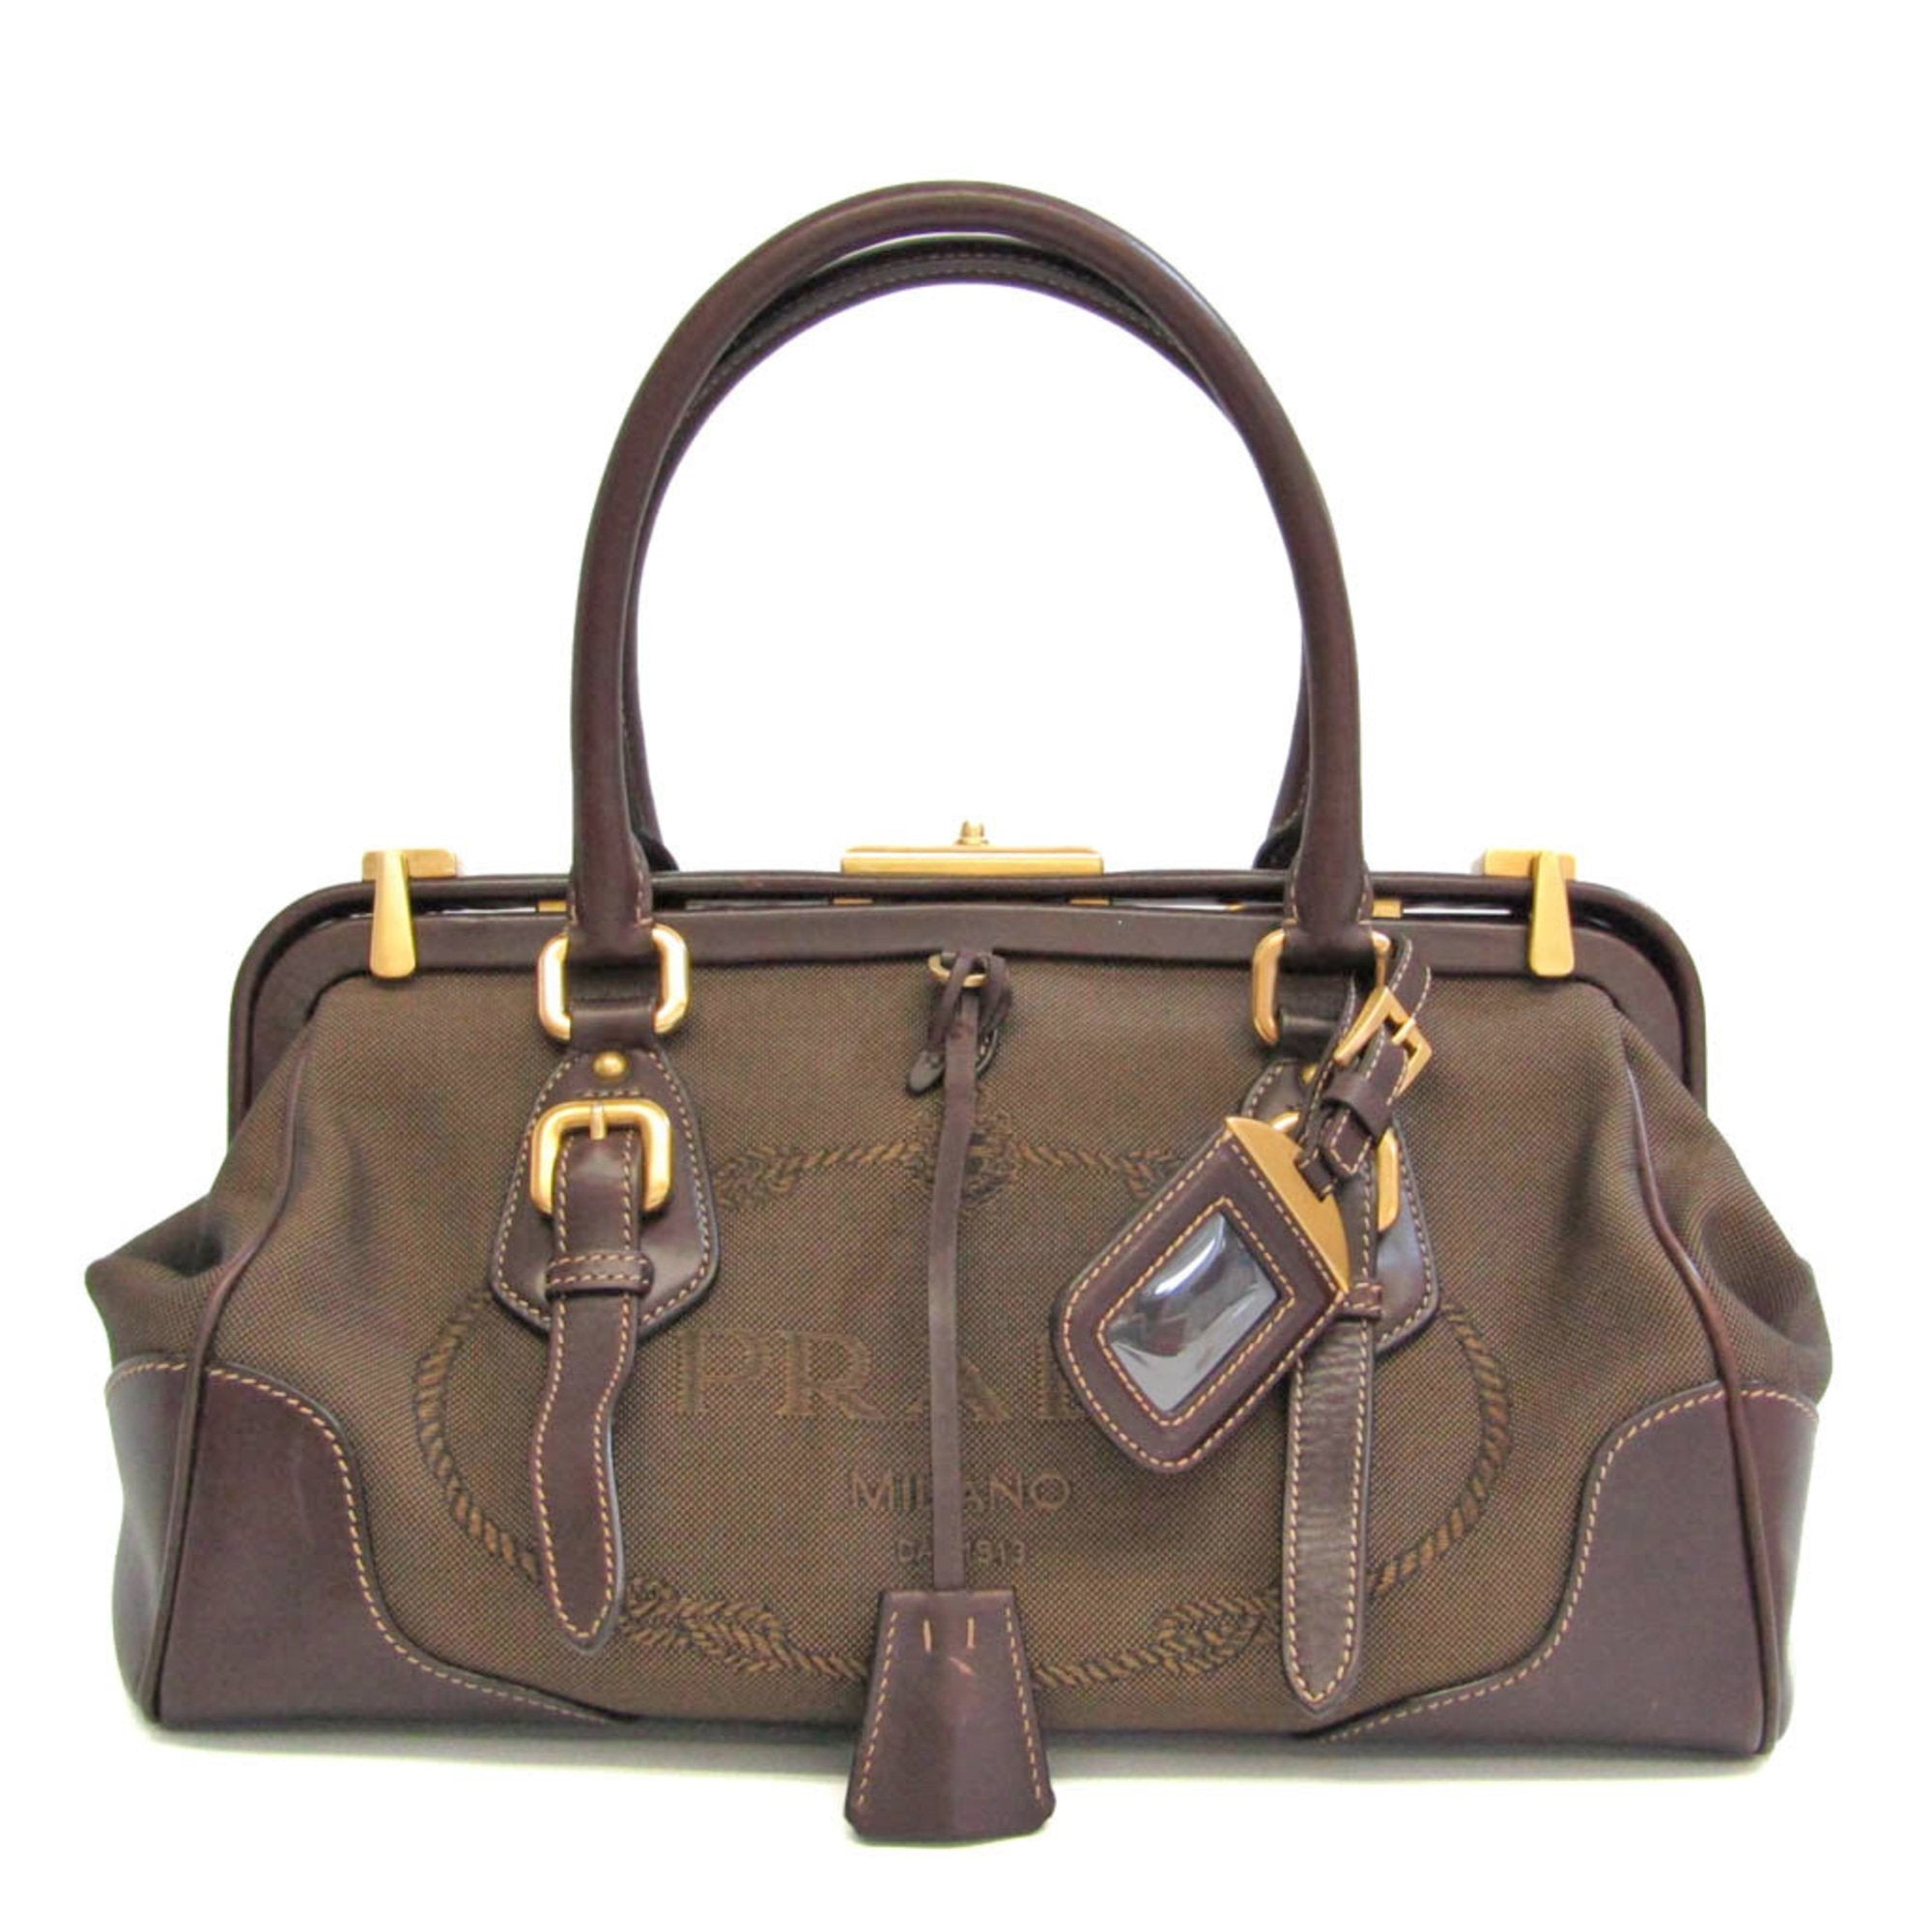 Prada Milano Dal 1913 Authentic Canvas Leather Vintage Bag Handbag 